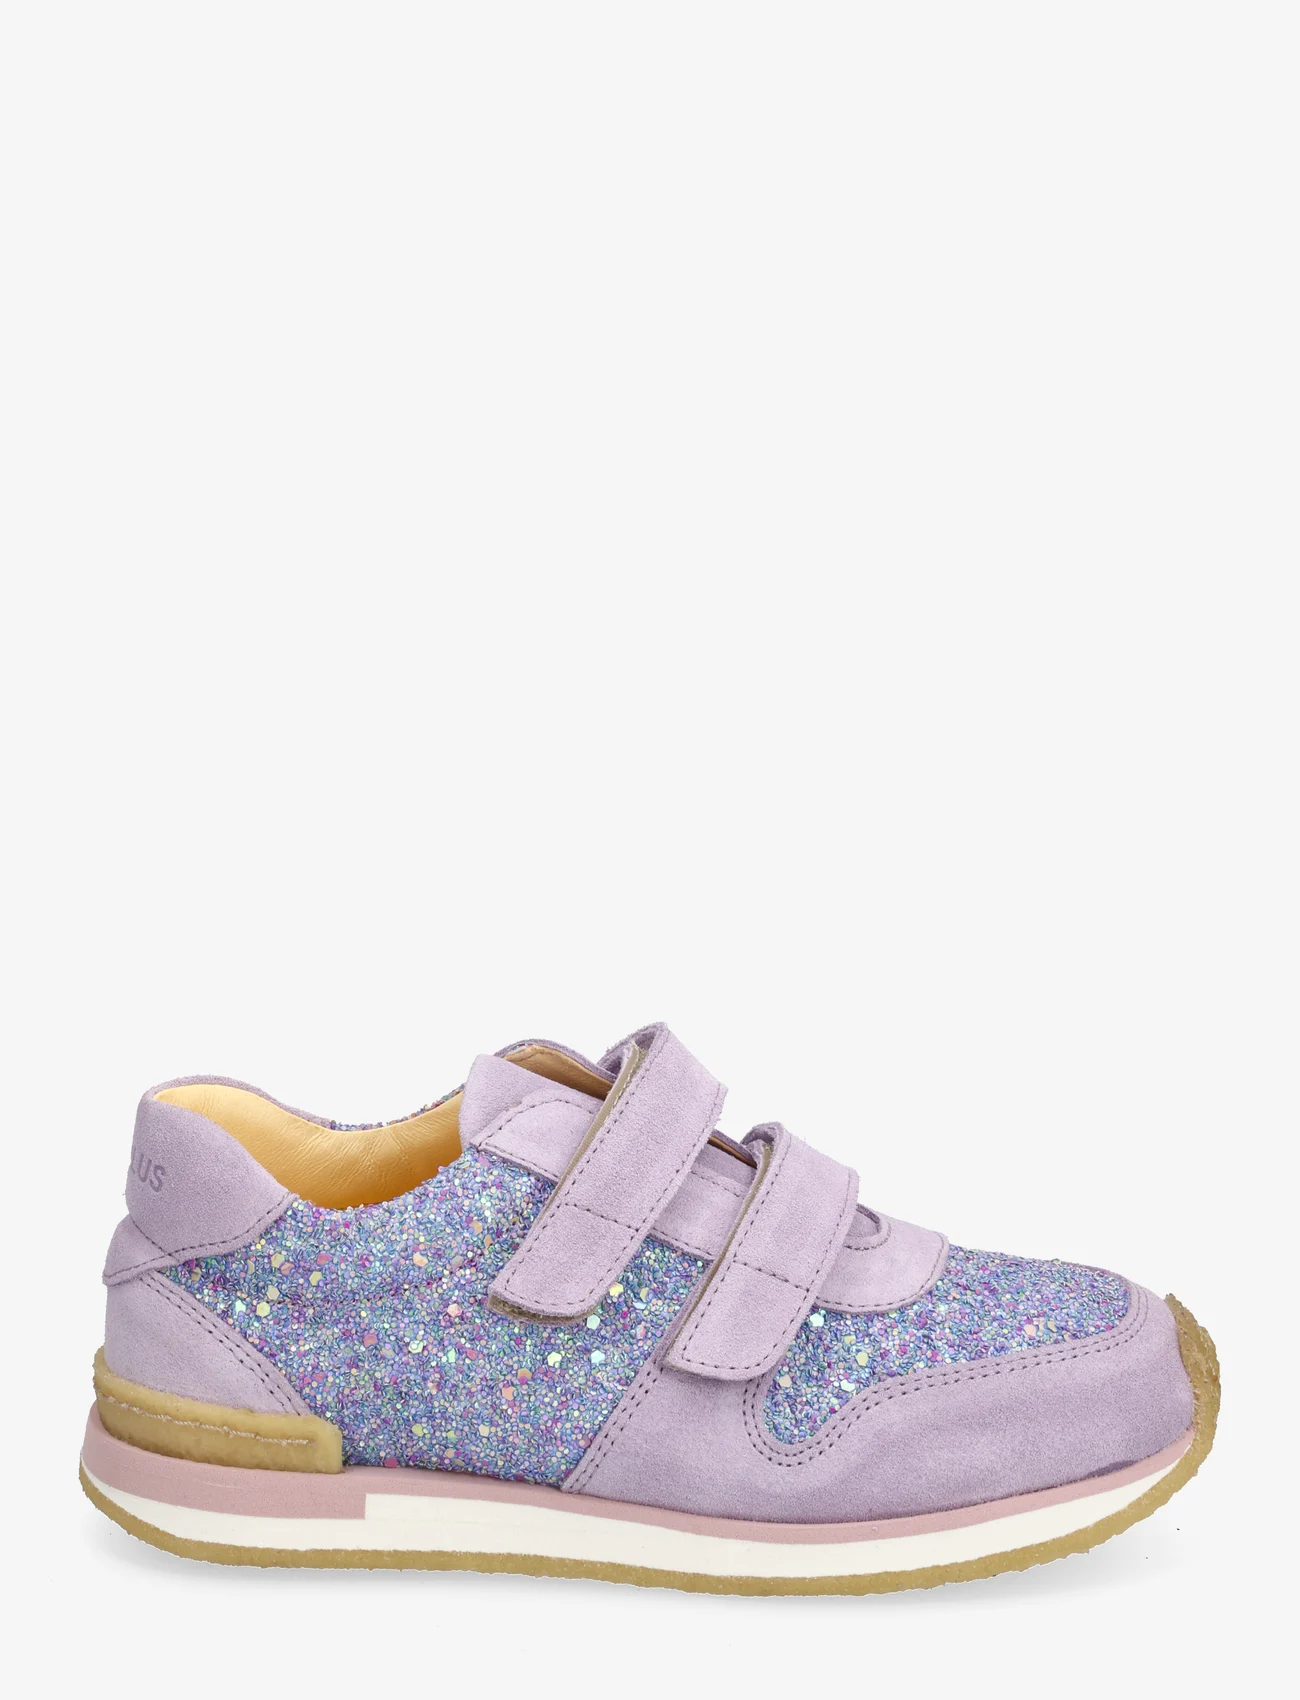 ANGULUS - Shoes - flat - with velcro - låga sneakers - 2245/2753 lilac/confetti glitt - 1